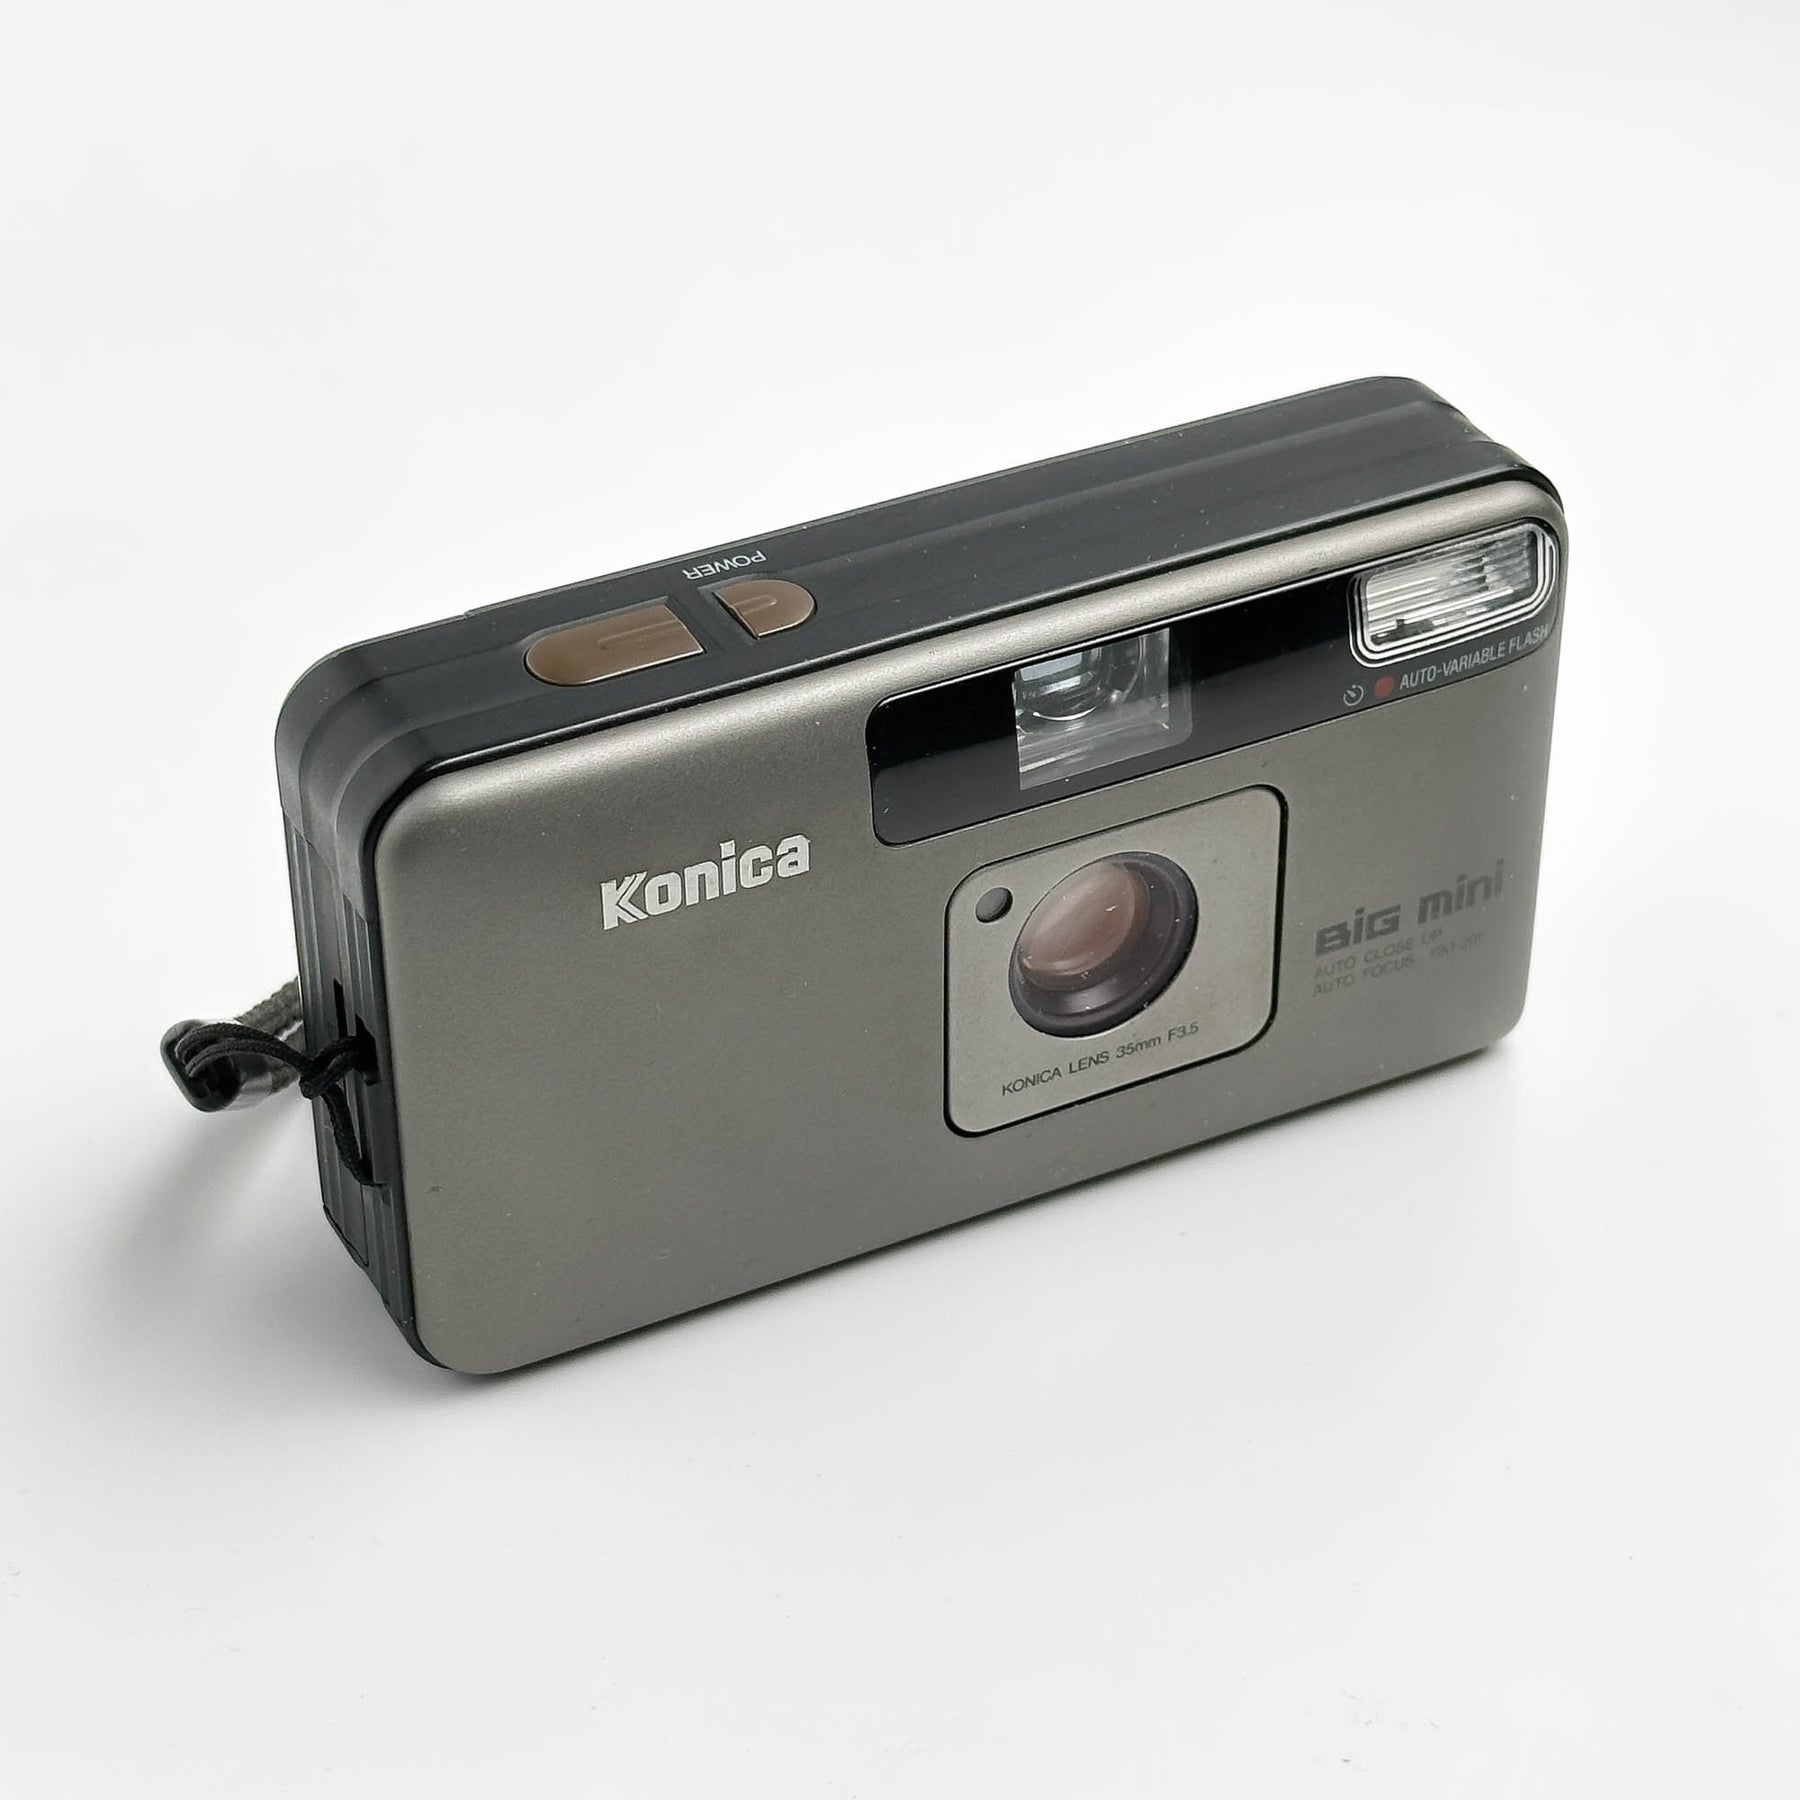 Analog Box N°62 - Konica Big Mini Bm-201 35mm f/3.5